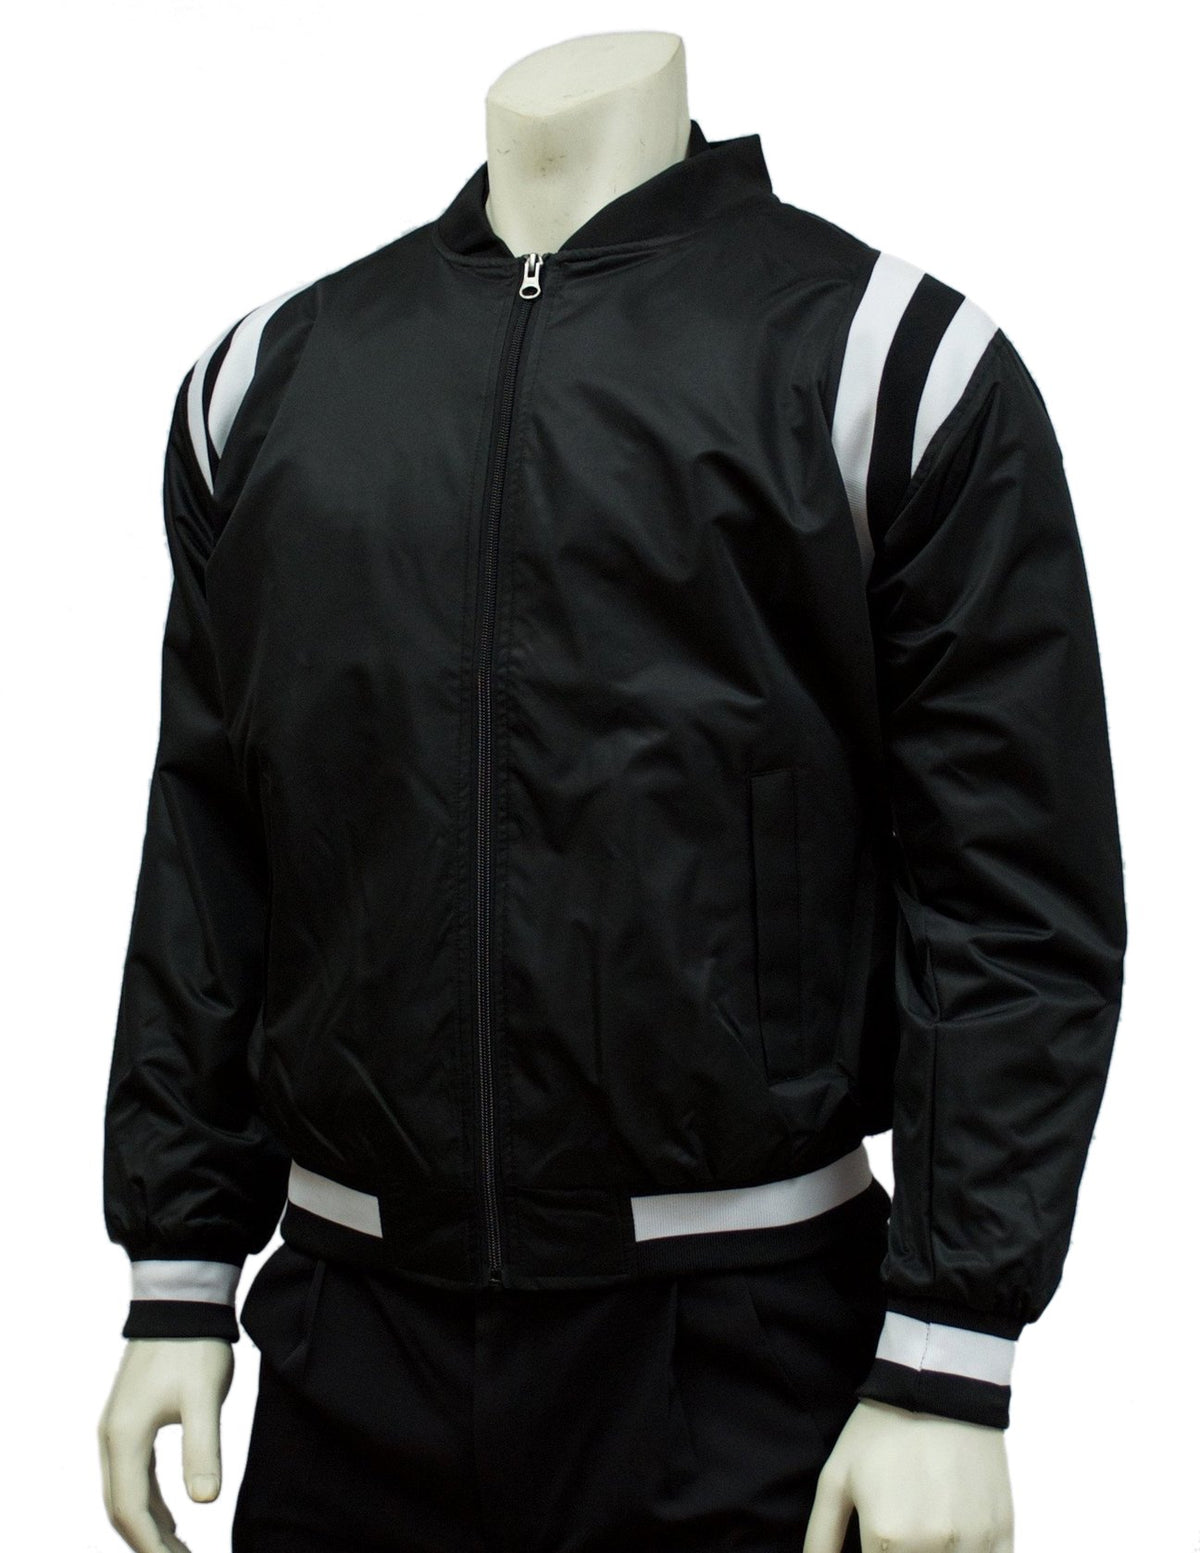 Smitty | BKS-227 | Black & White Collegiate Style Front Zip Polyester Jacket